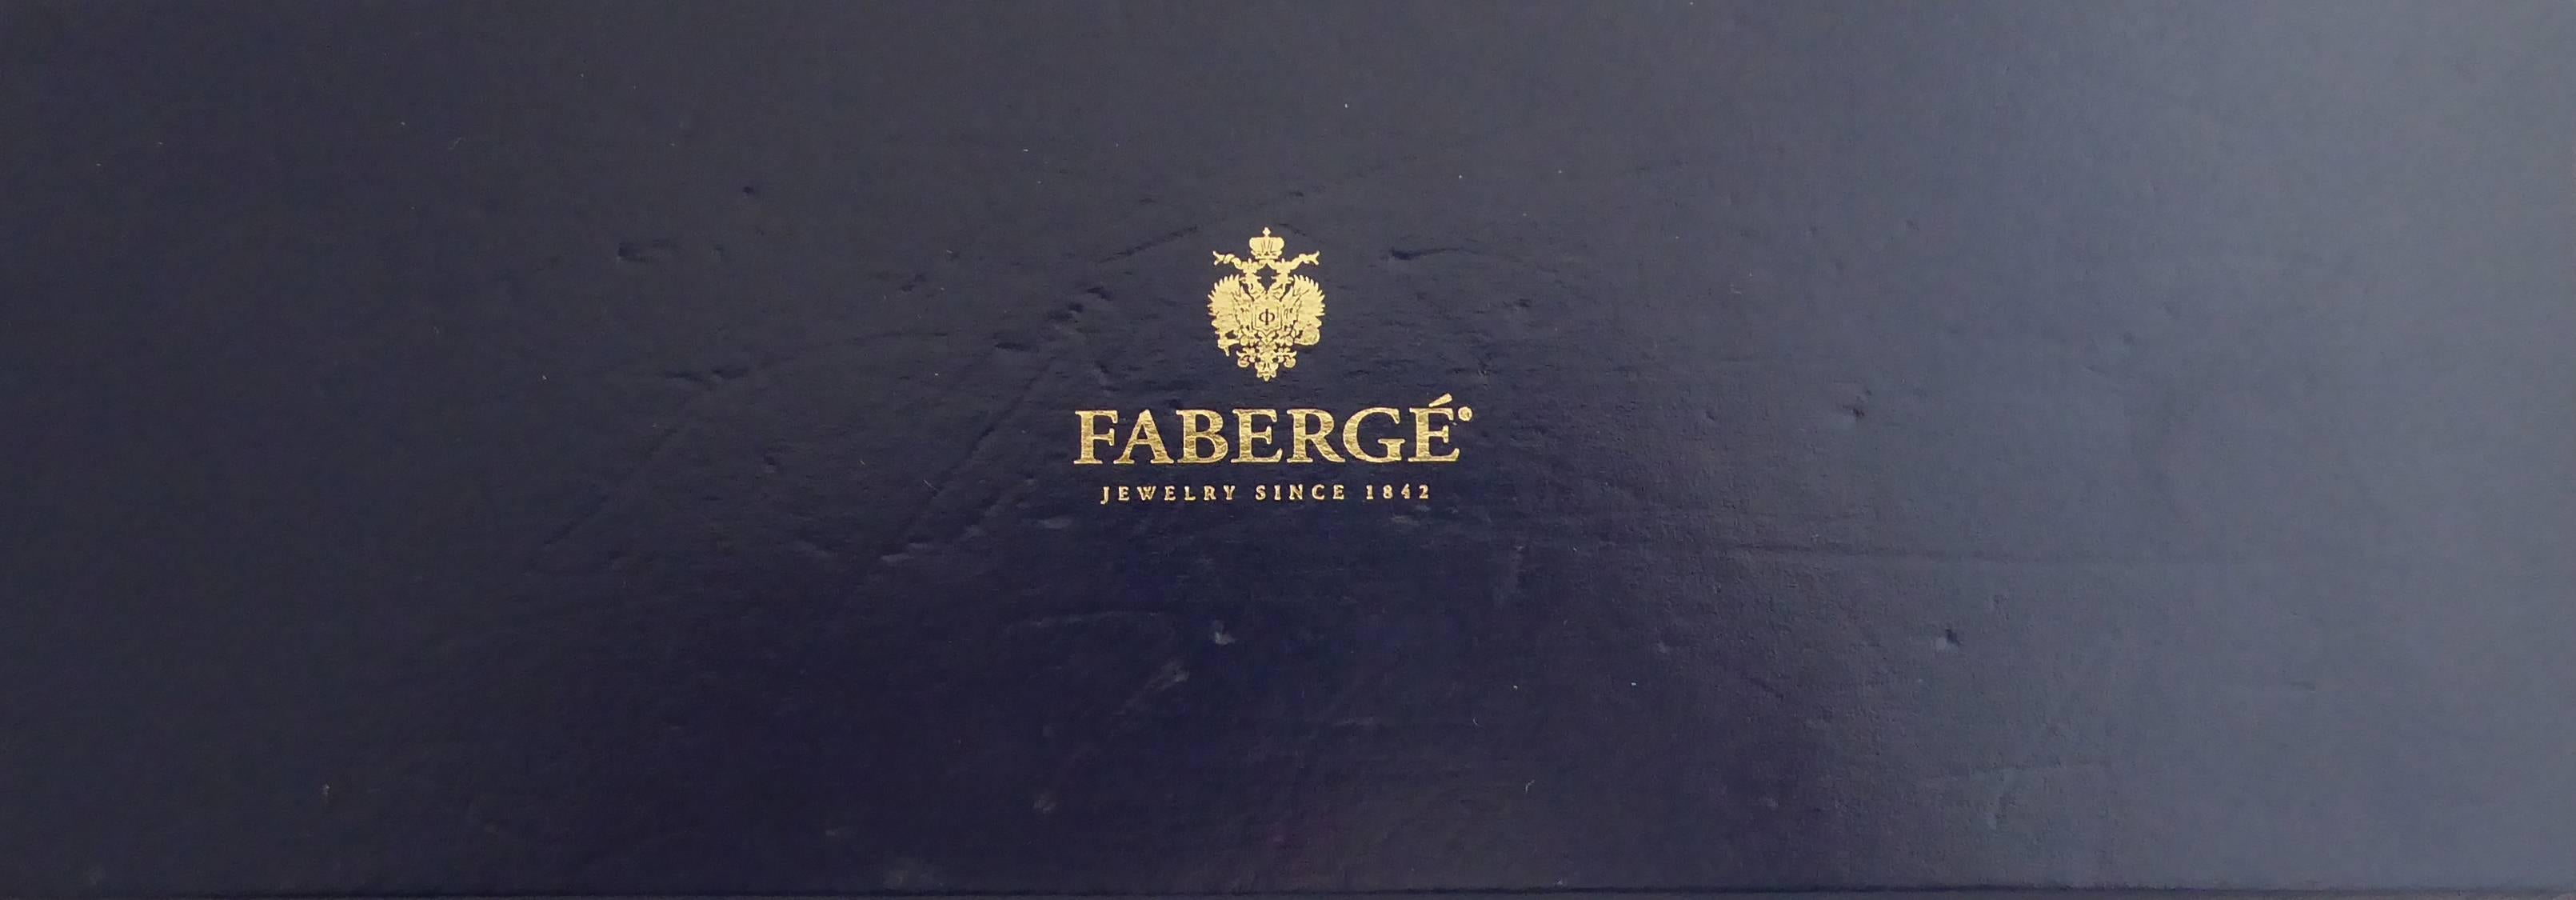 Faberge Easter Egg Charm Bracelet, Gold, Enamel, 0.18 Carat Diamonds, Boxed 3